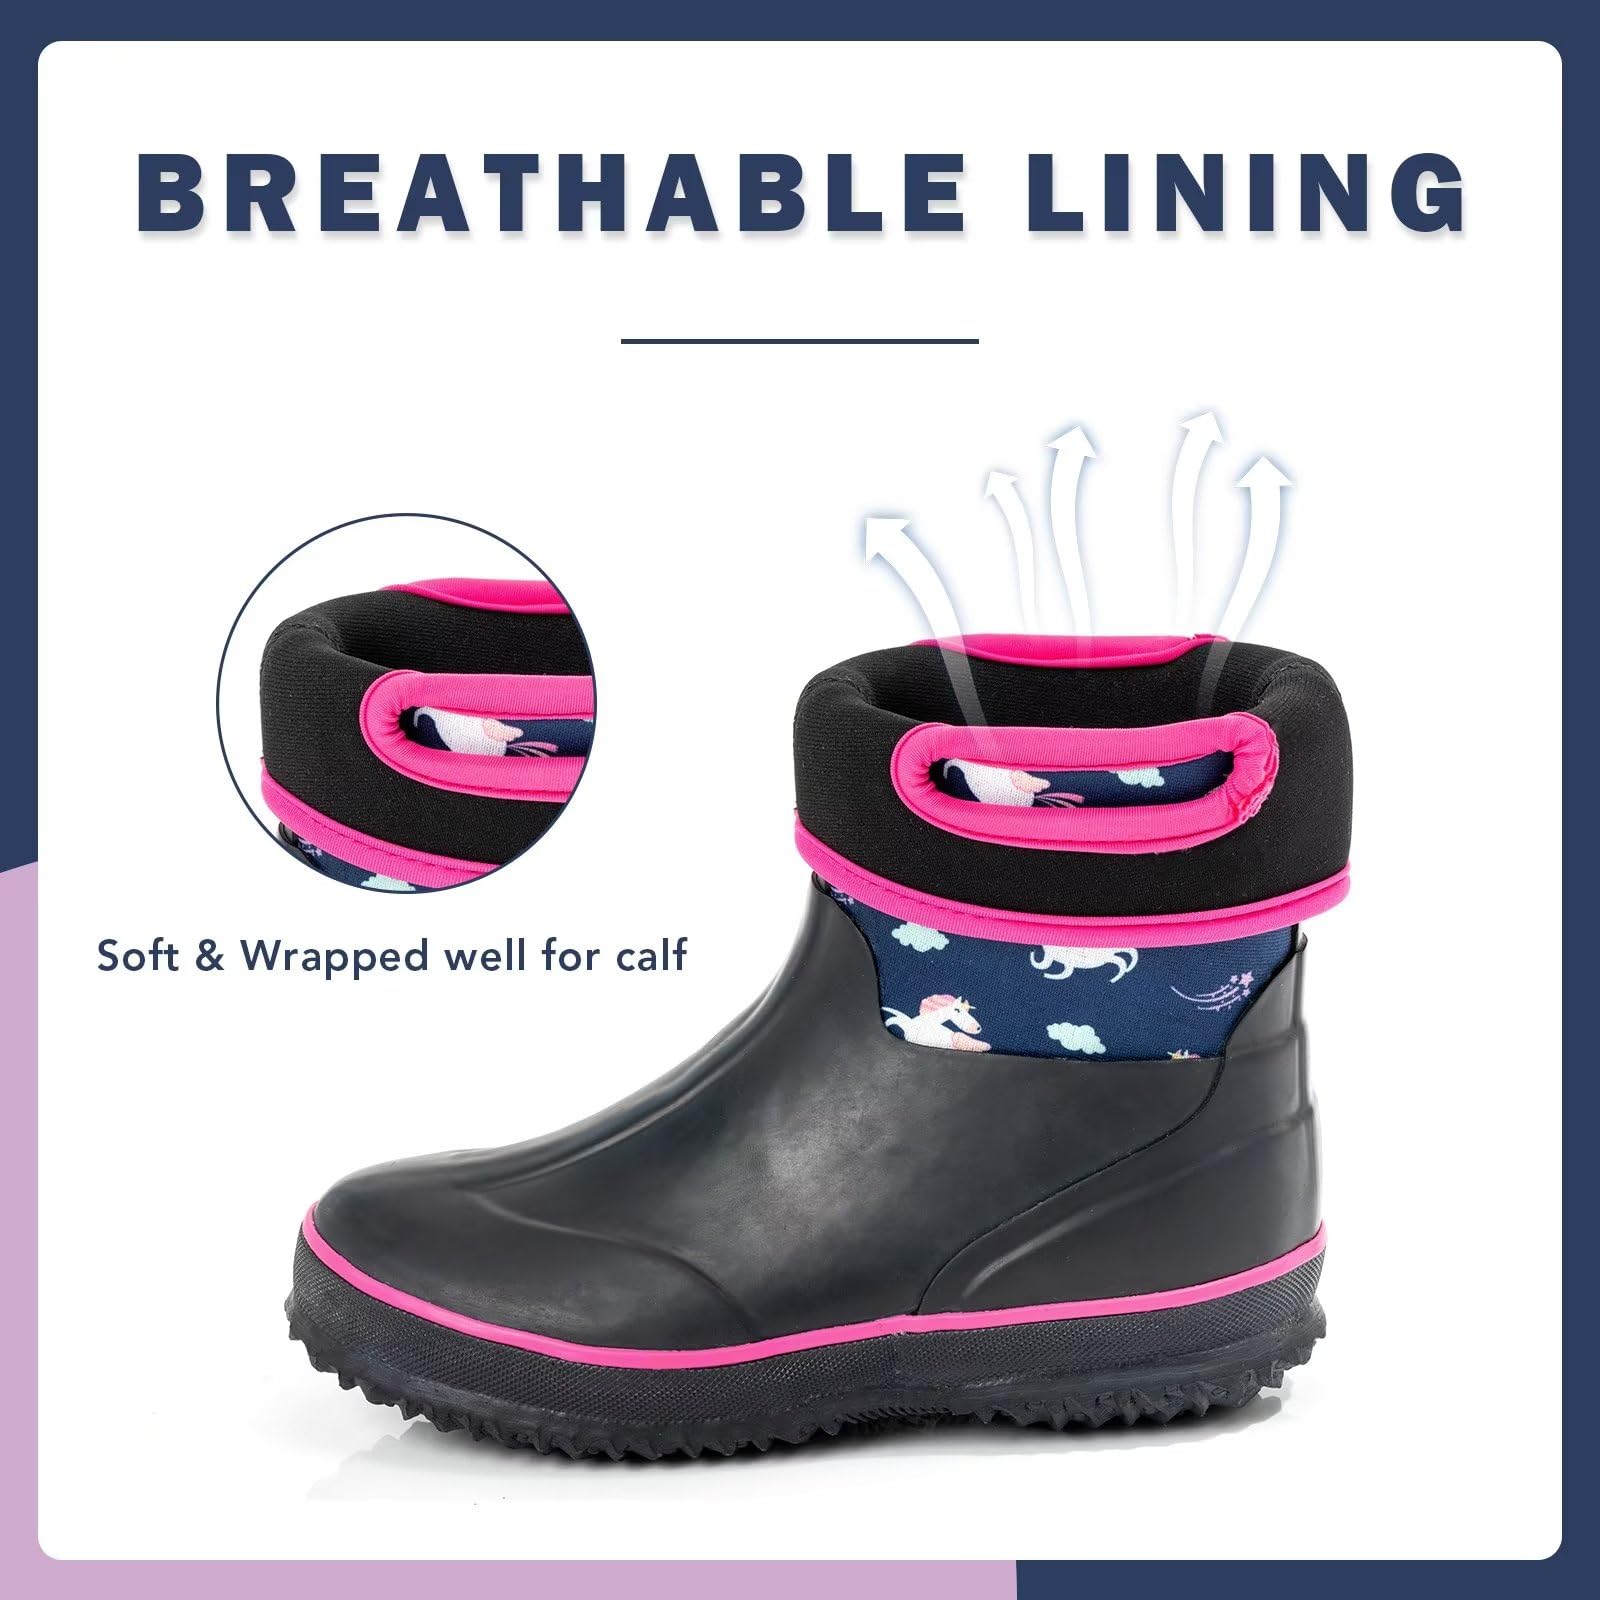 FUNCOO PLUS Kids Waterproof Neoprene Rain Boots Girls Boys Outdoor Mud Boots Children Insulated Rubber Snow Boots